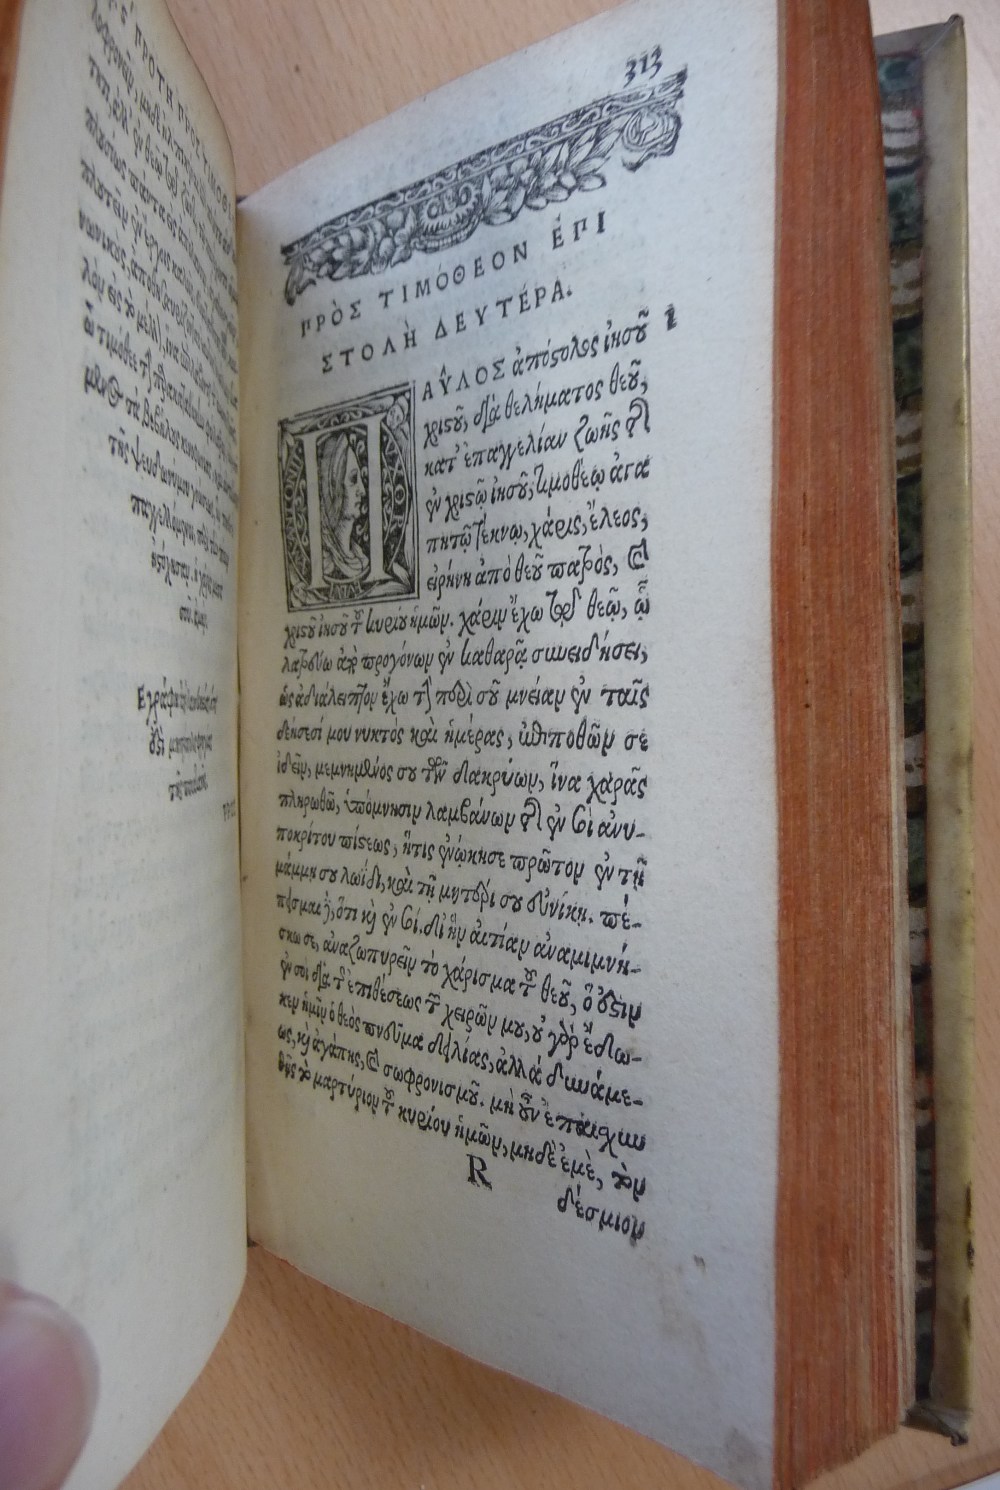 New Testament Noui Testamenti omnia, 1538, Basileae, Thomam Flatterum, octavo, Greek text, - Image 4 of 5